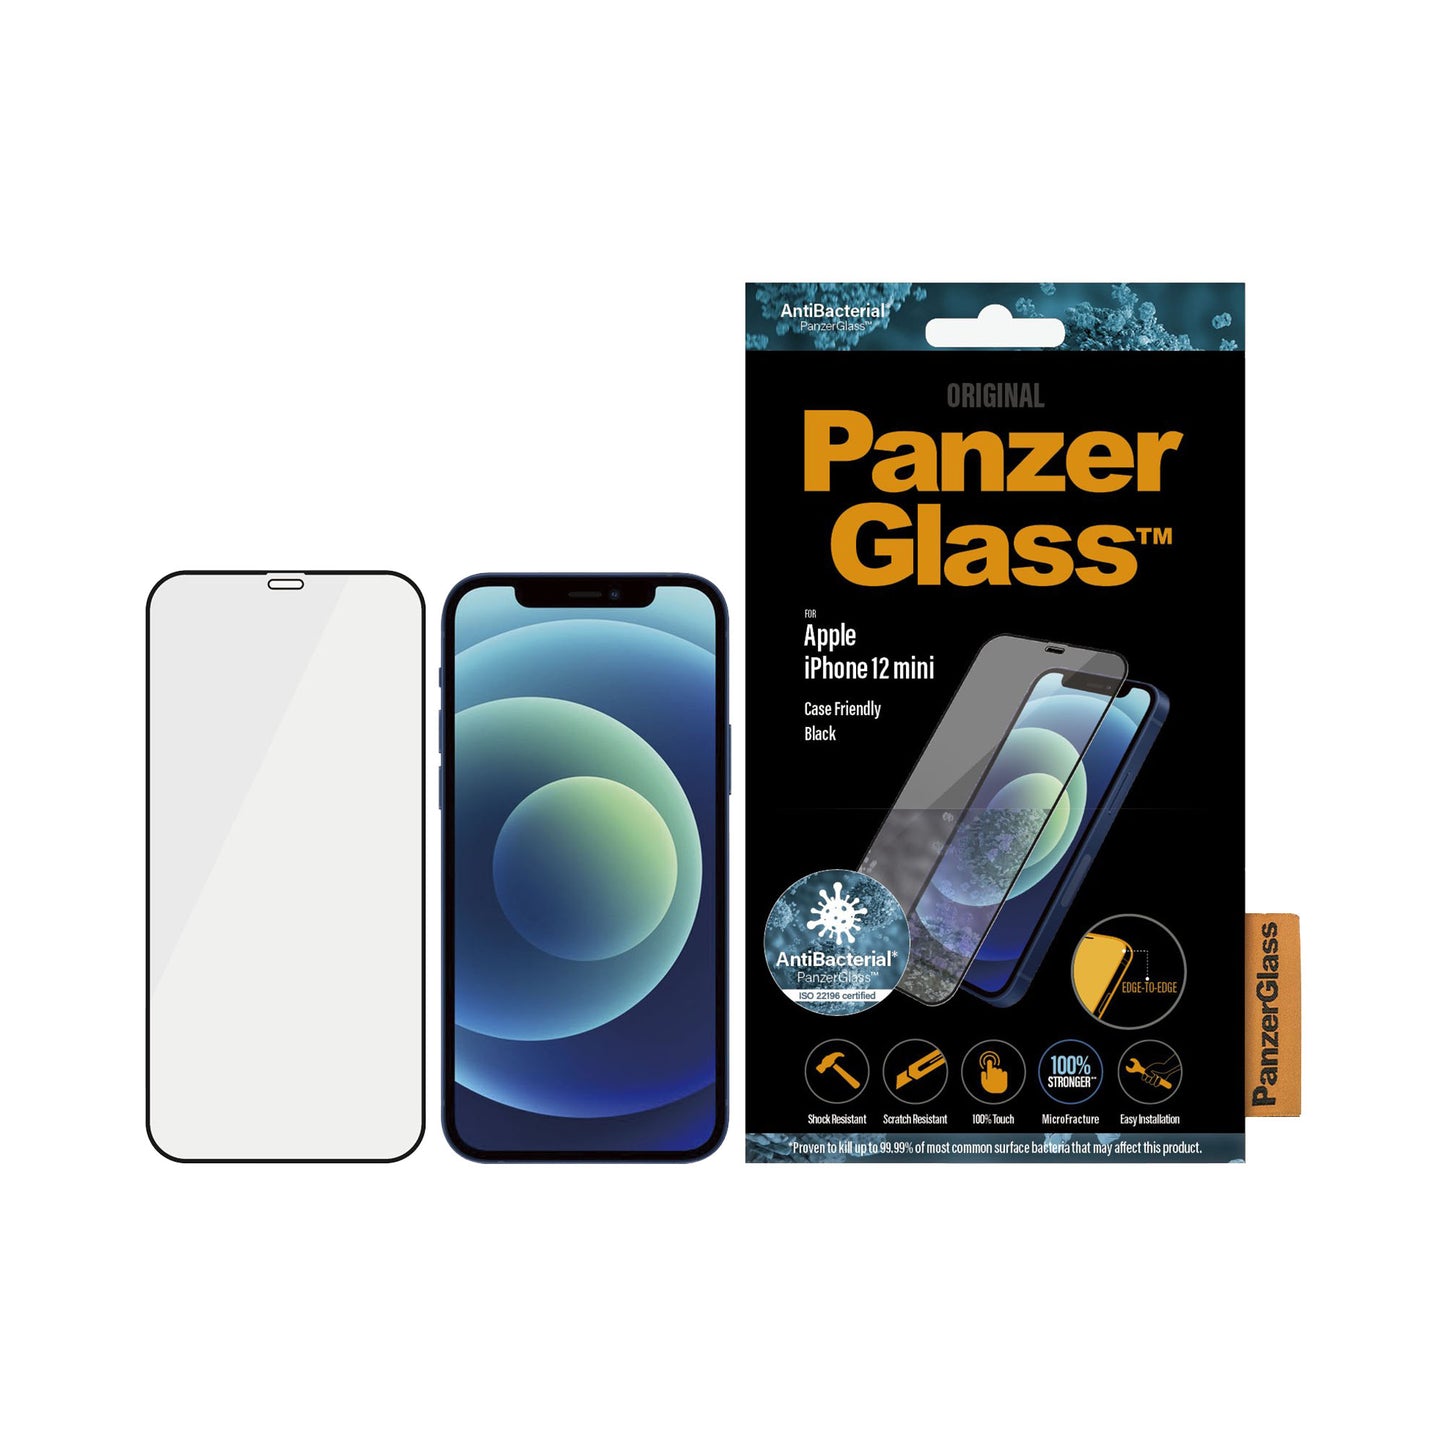 PANZERGLASS Case Friendly Black for iPhone 12 mini - Clear